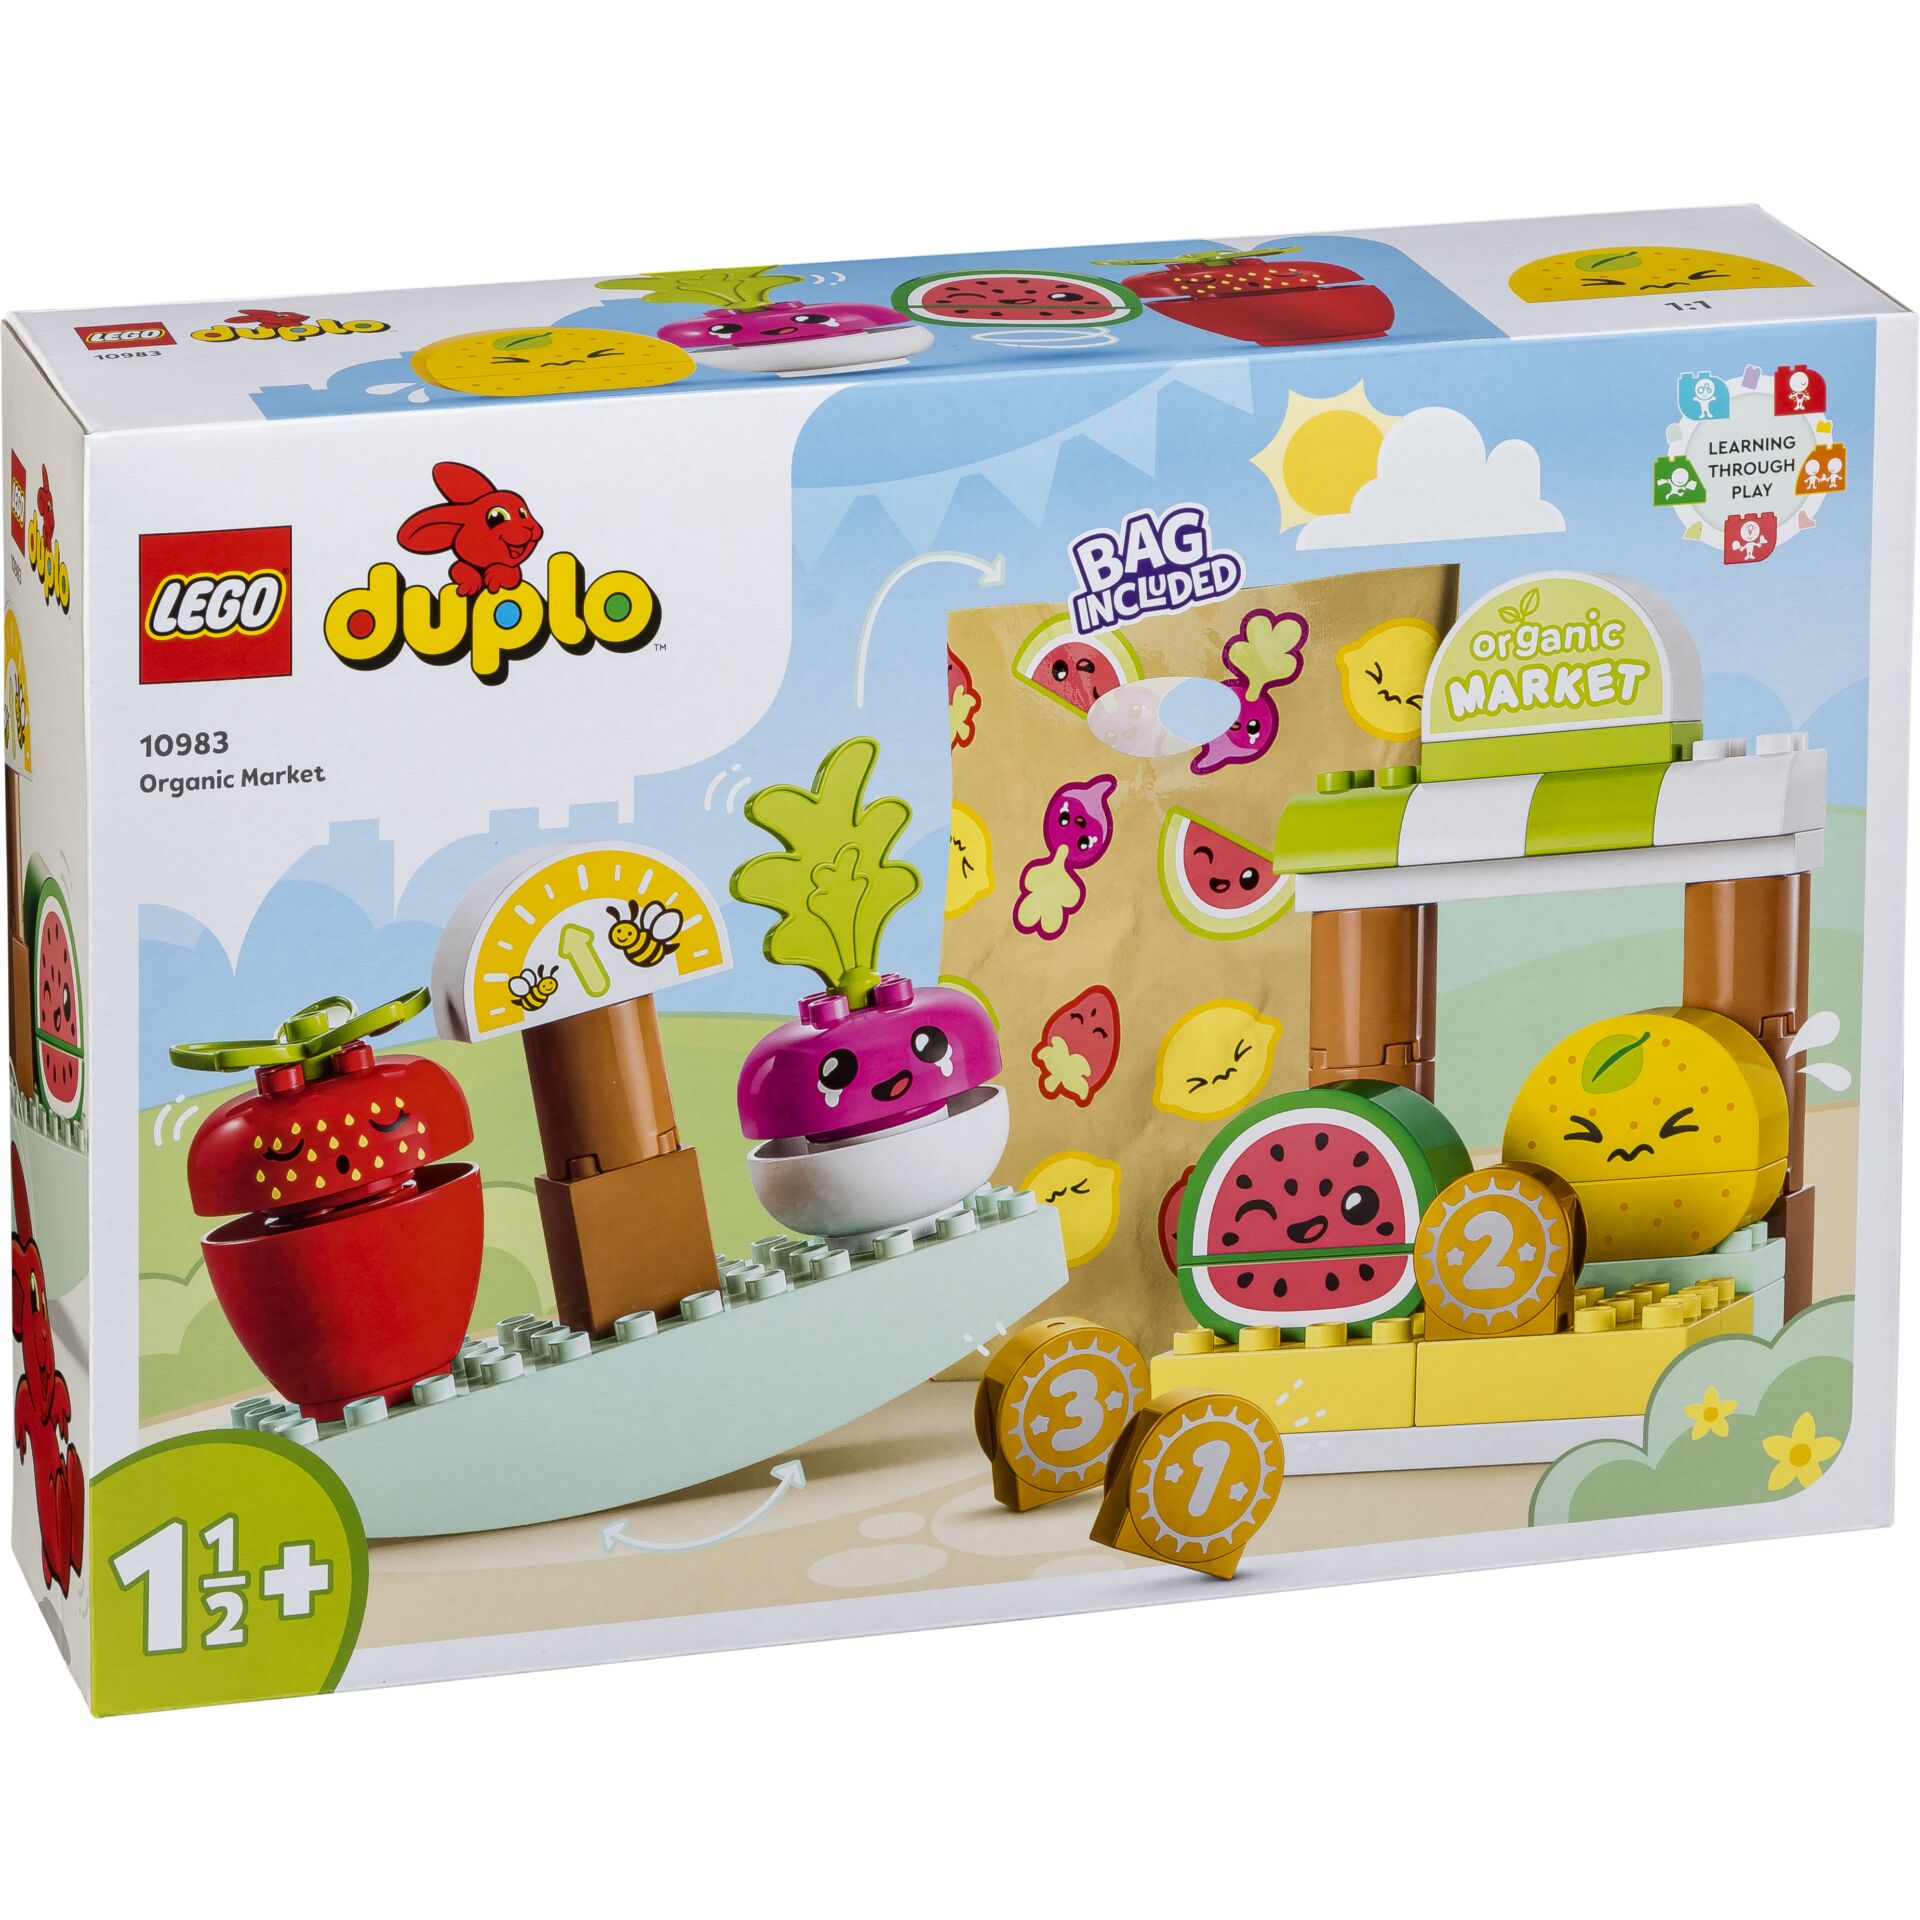 Lego -Konstruktionsspielzeug 10983 DUPLO Biomarkt Toys/Spielzeug -Lego